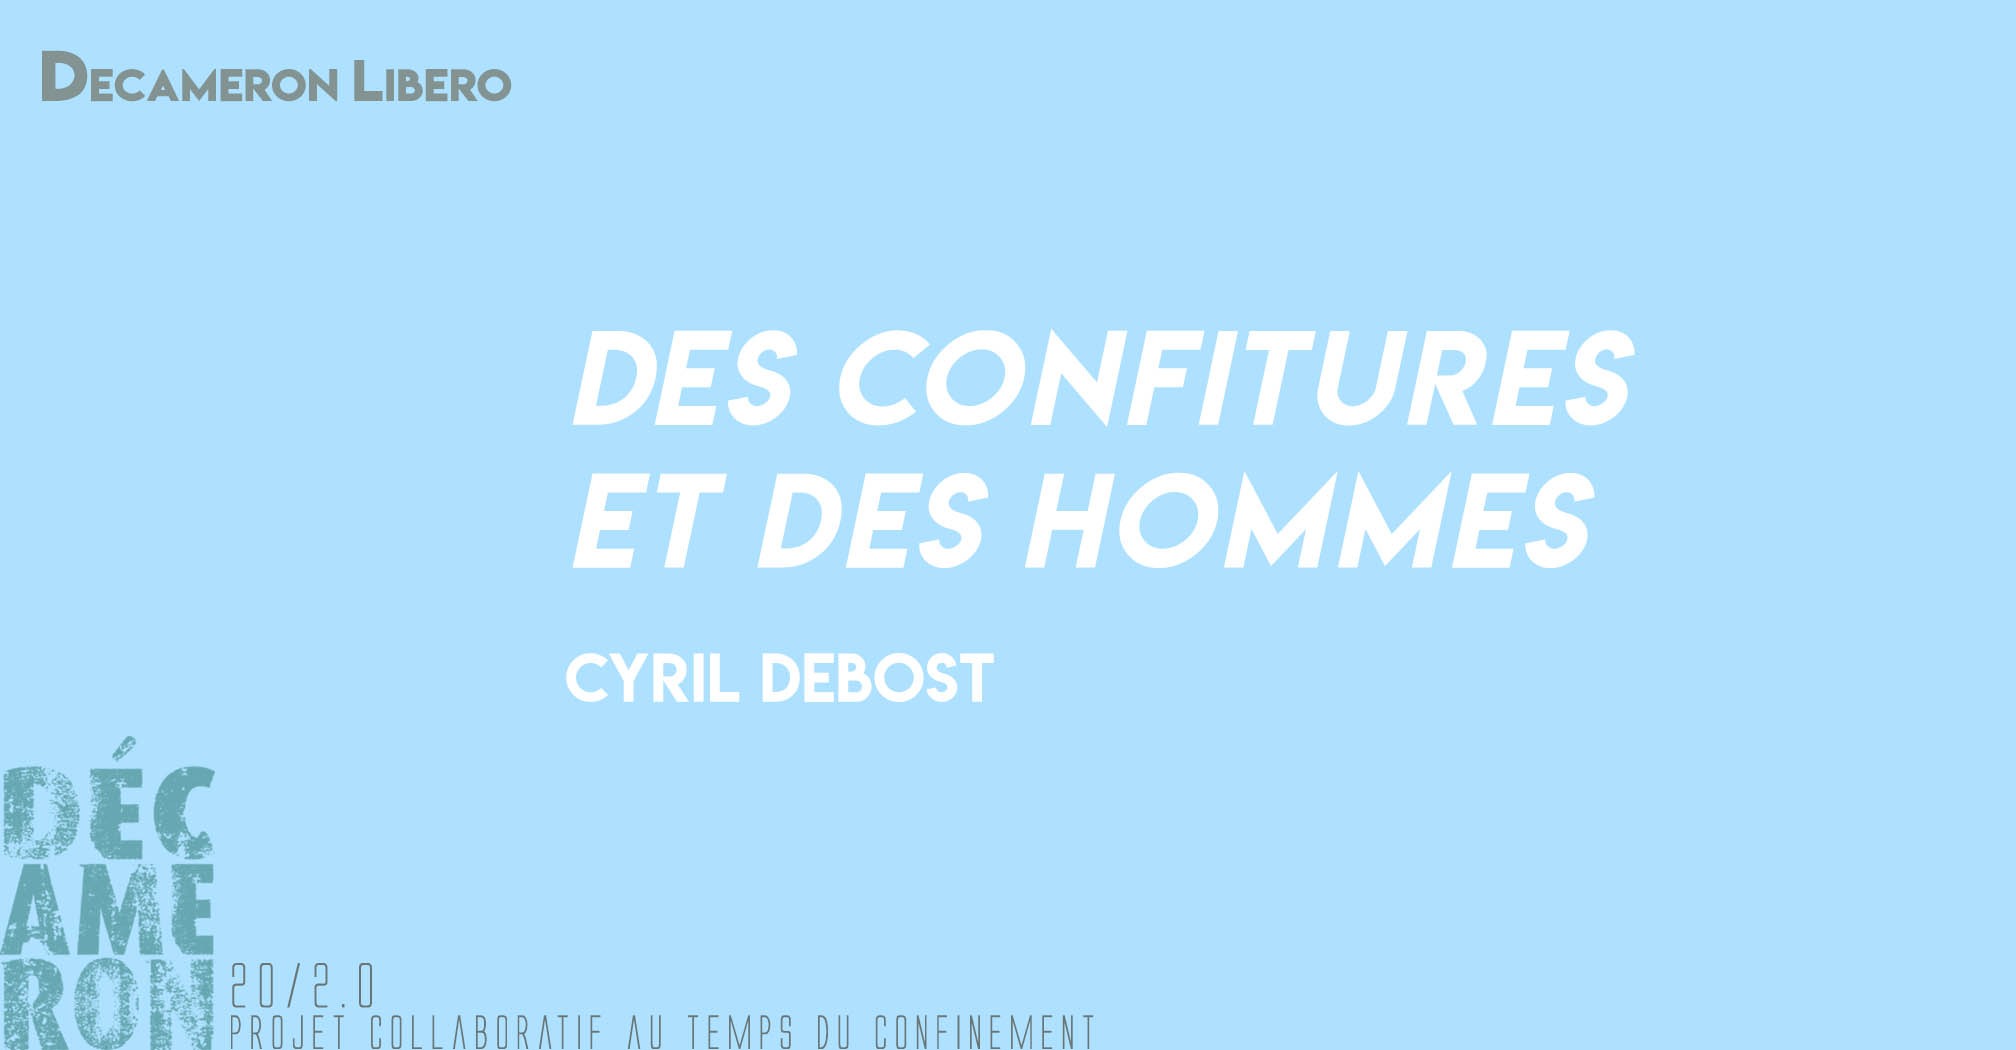 Des confitures et des hommes - Cyril Debost